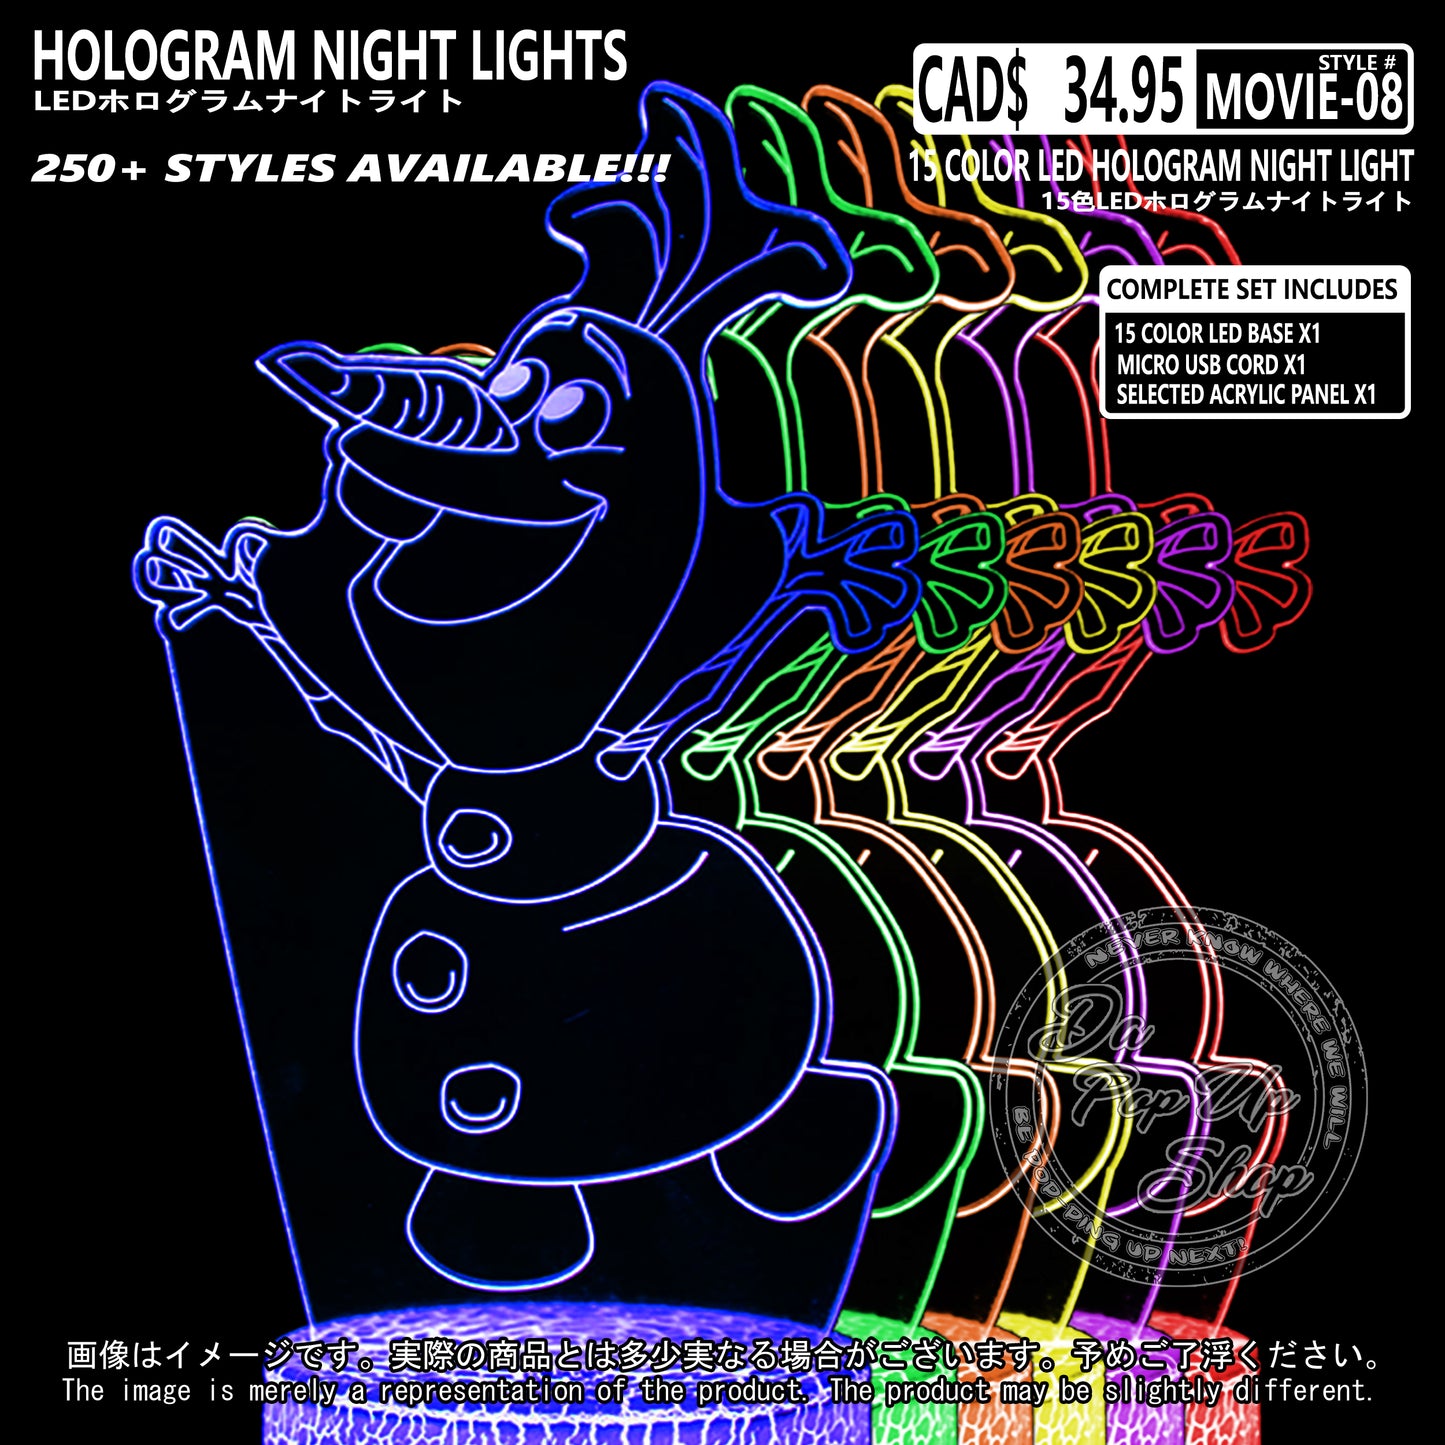 (MOVIE-08) OLAF Disney Frozen Hologram LED Night Light